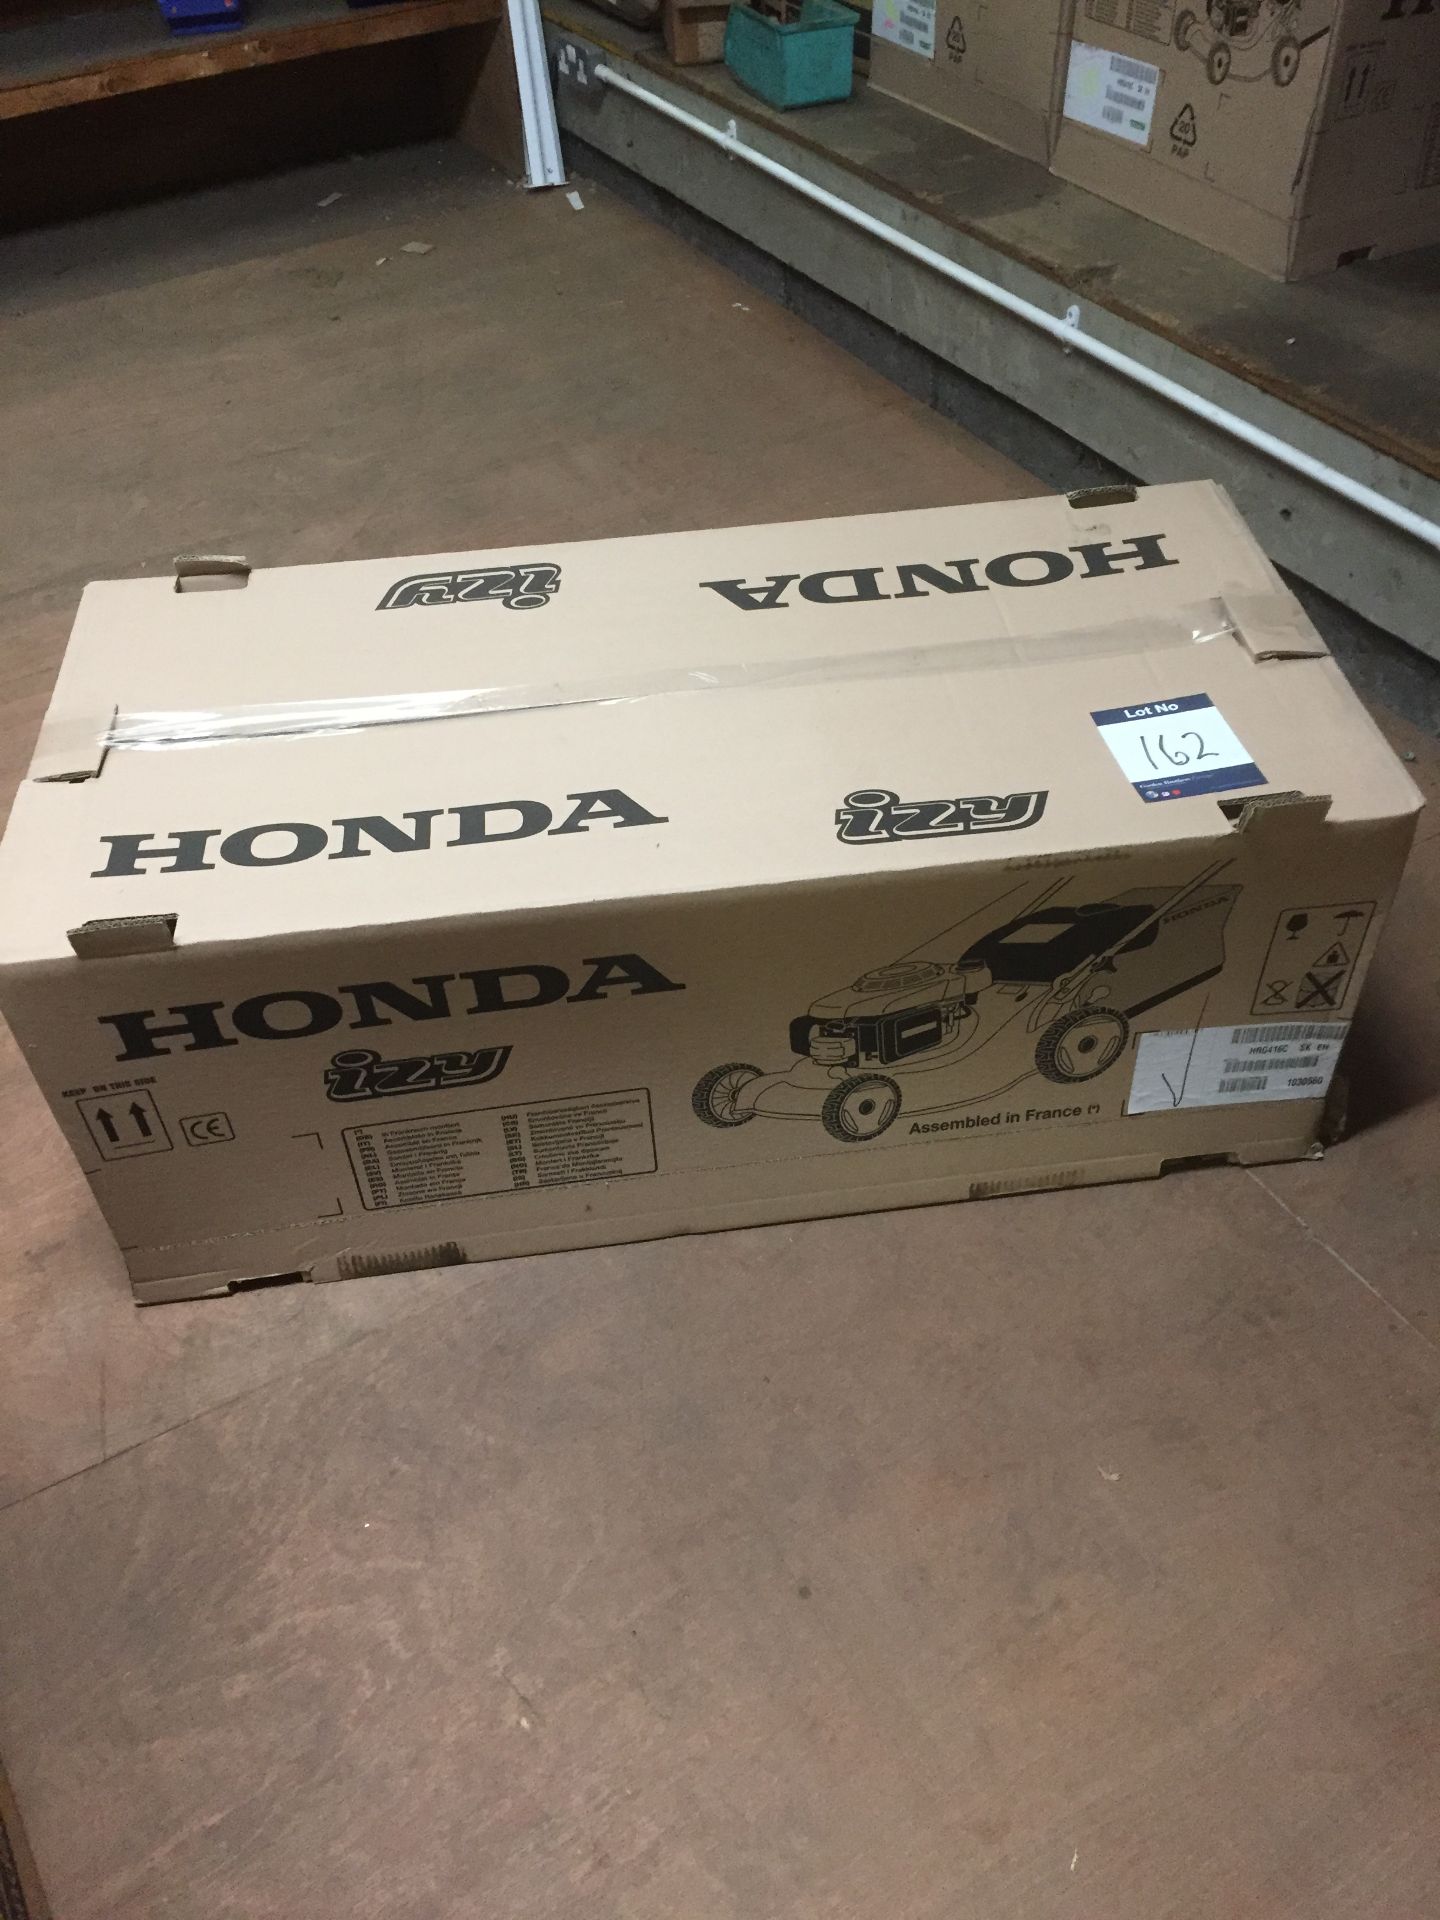 Honda IZY HRG 416C petrol rotary lawnmower (boxed)